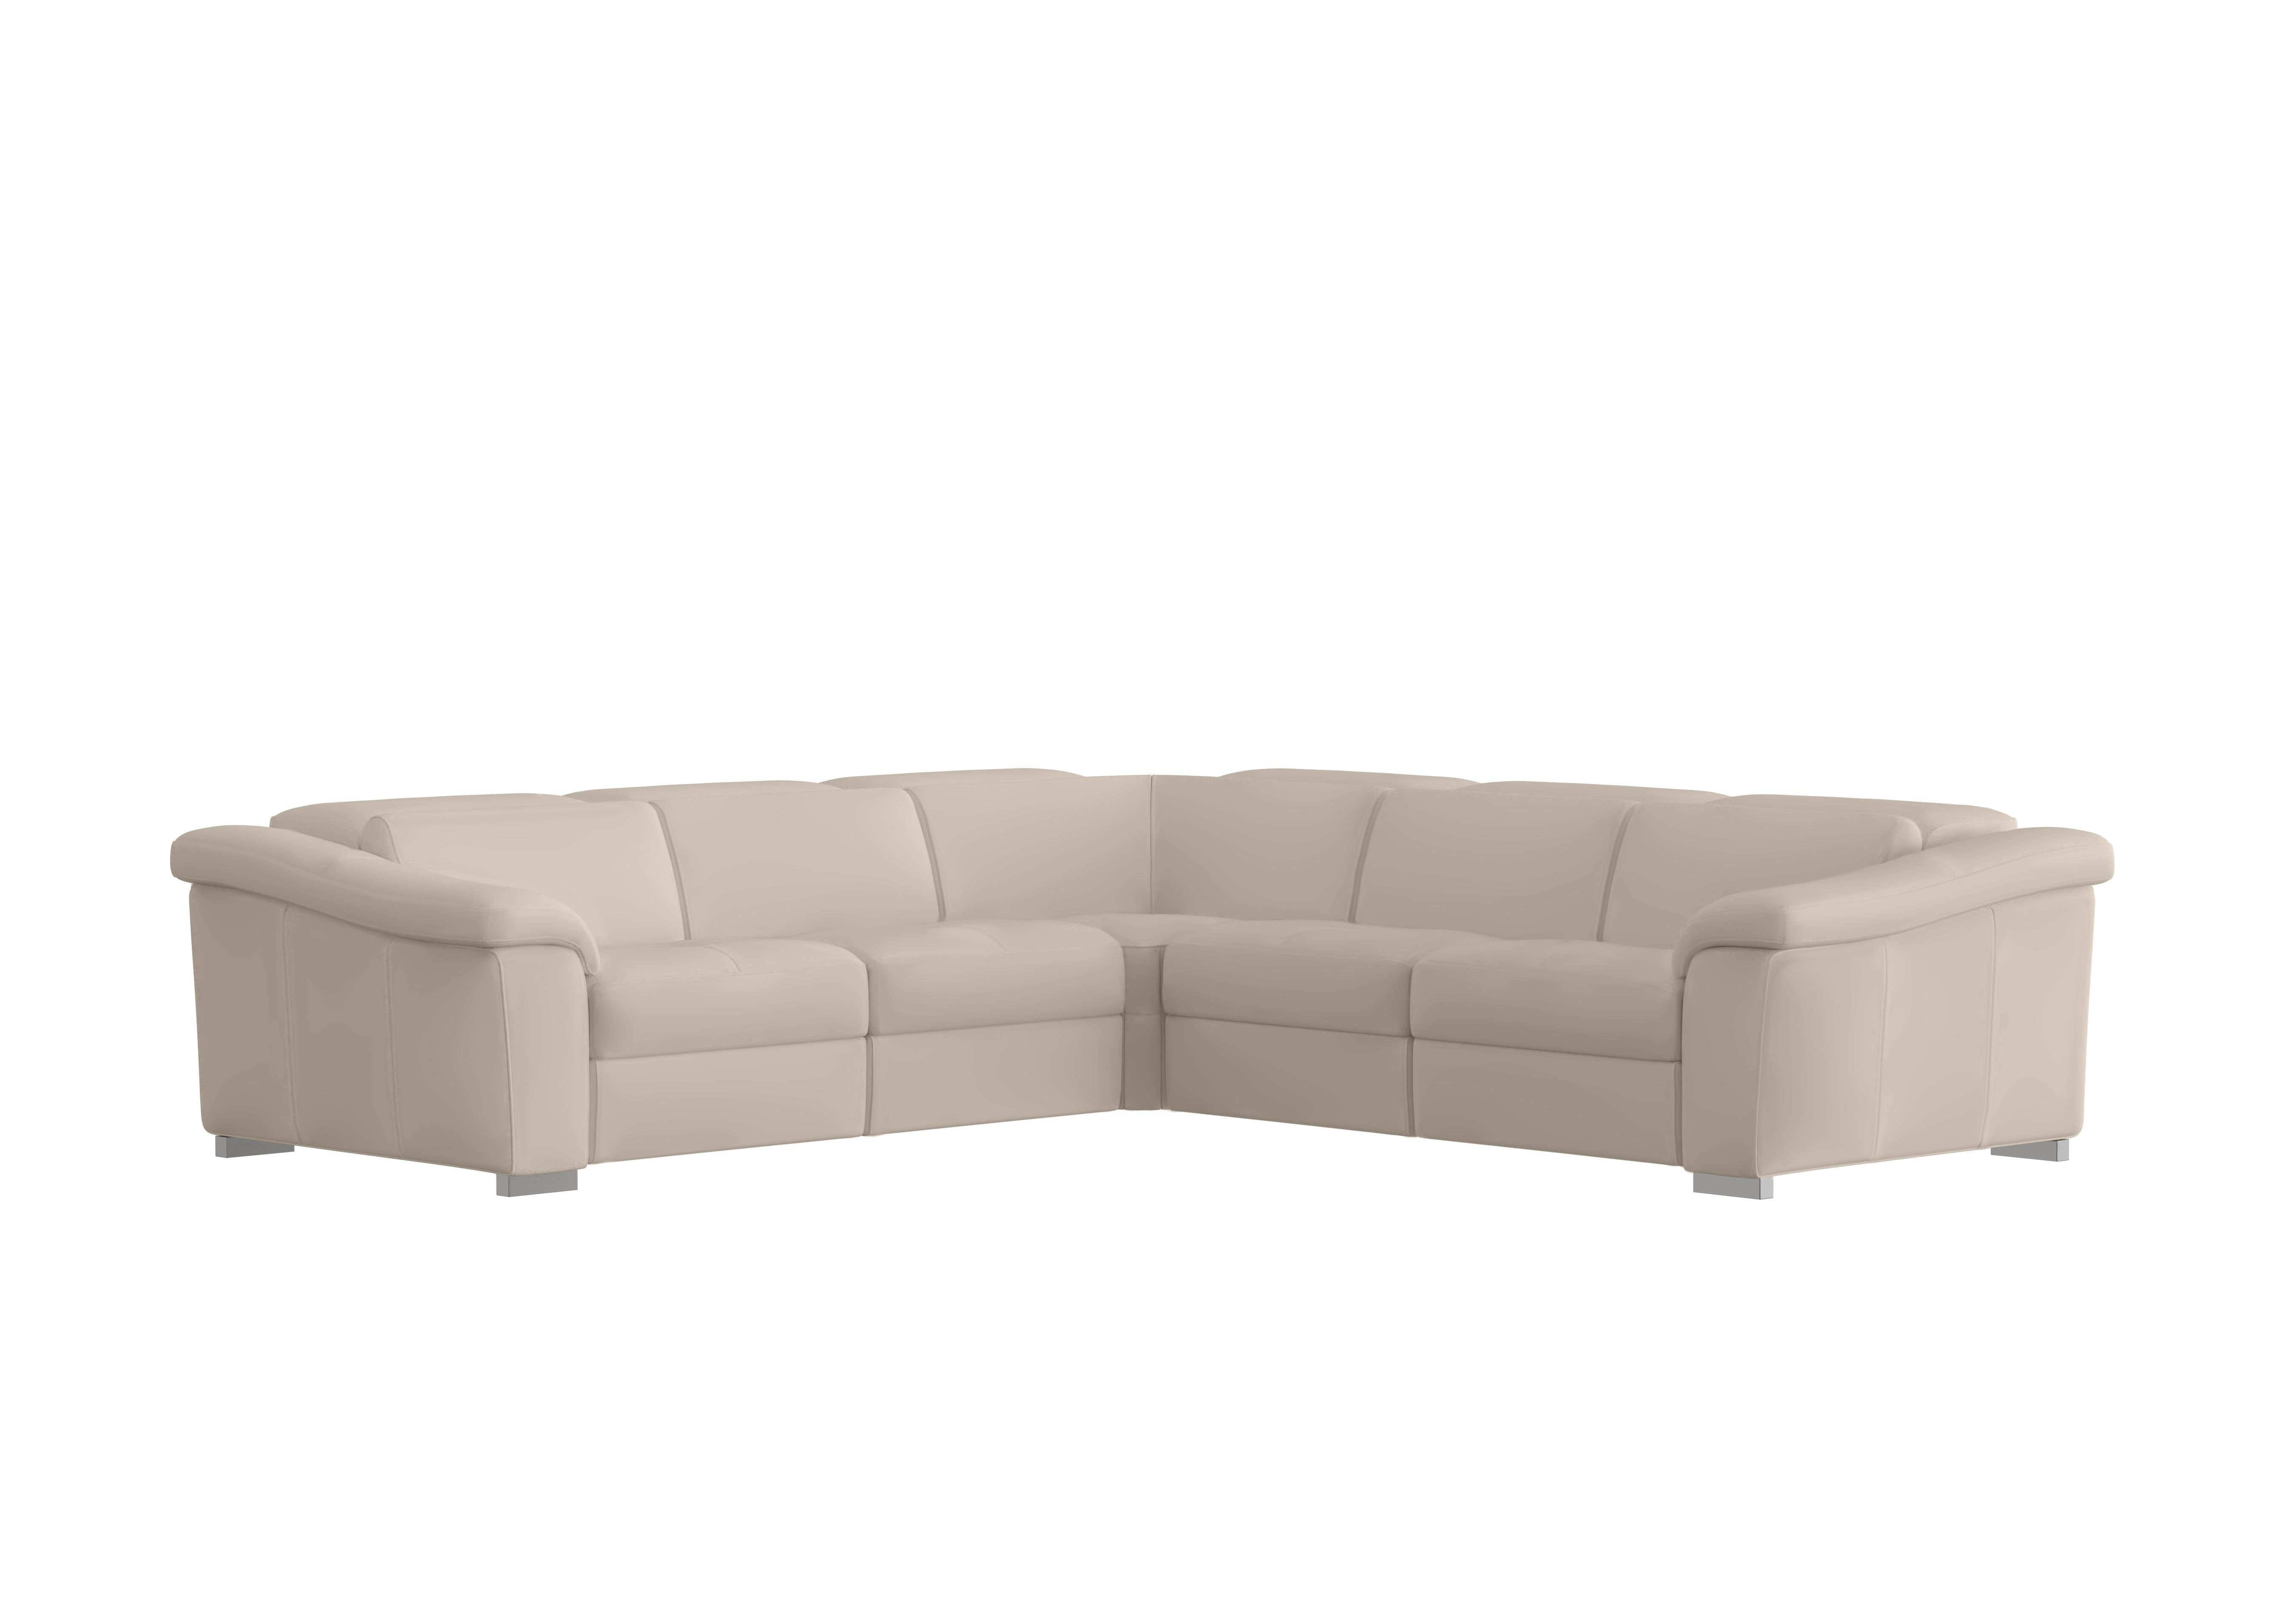 Galileo Leather Large Corner Sofa in Botero Crema 2156 Ch on Furniture Village